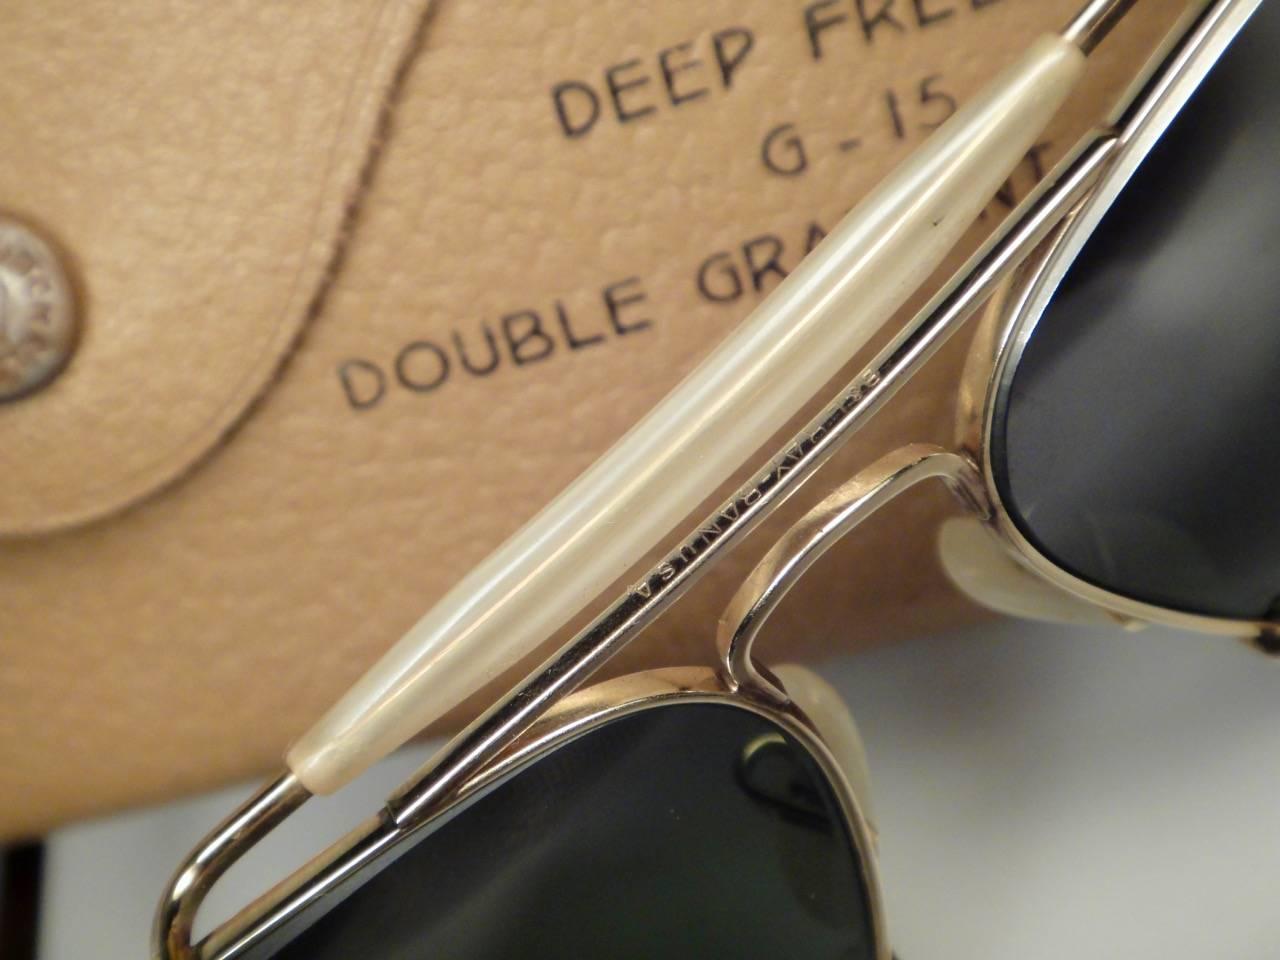 New Ray Ban Deep Freeze 12K Gold Outdoorsman Collectors Item USA Sunglasses 2